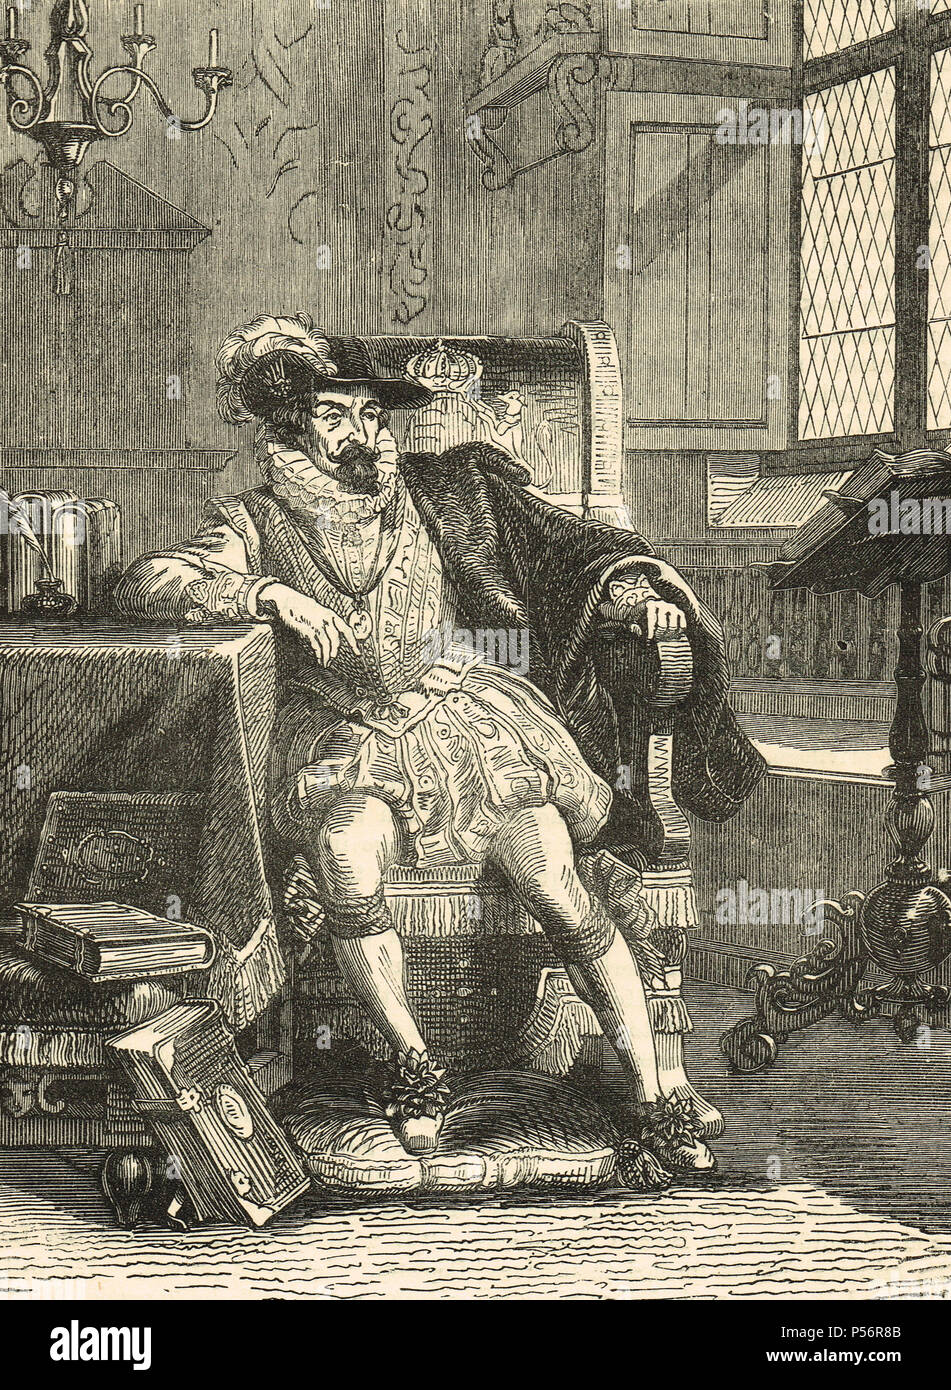 King James I of England, King James VI of Scotland, seated on his throne Stock Photo